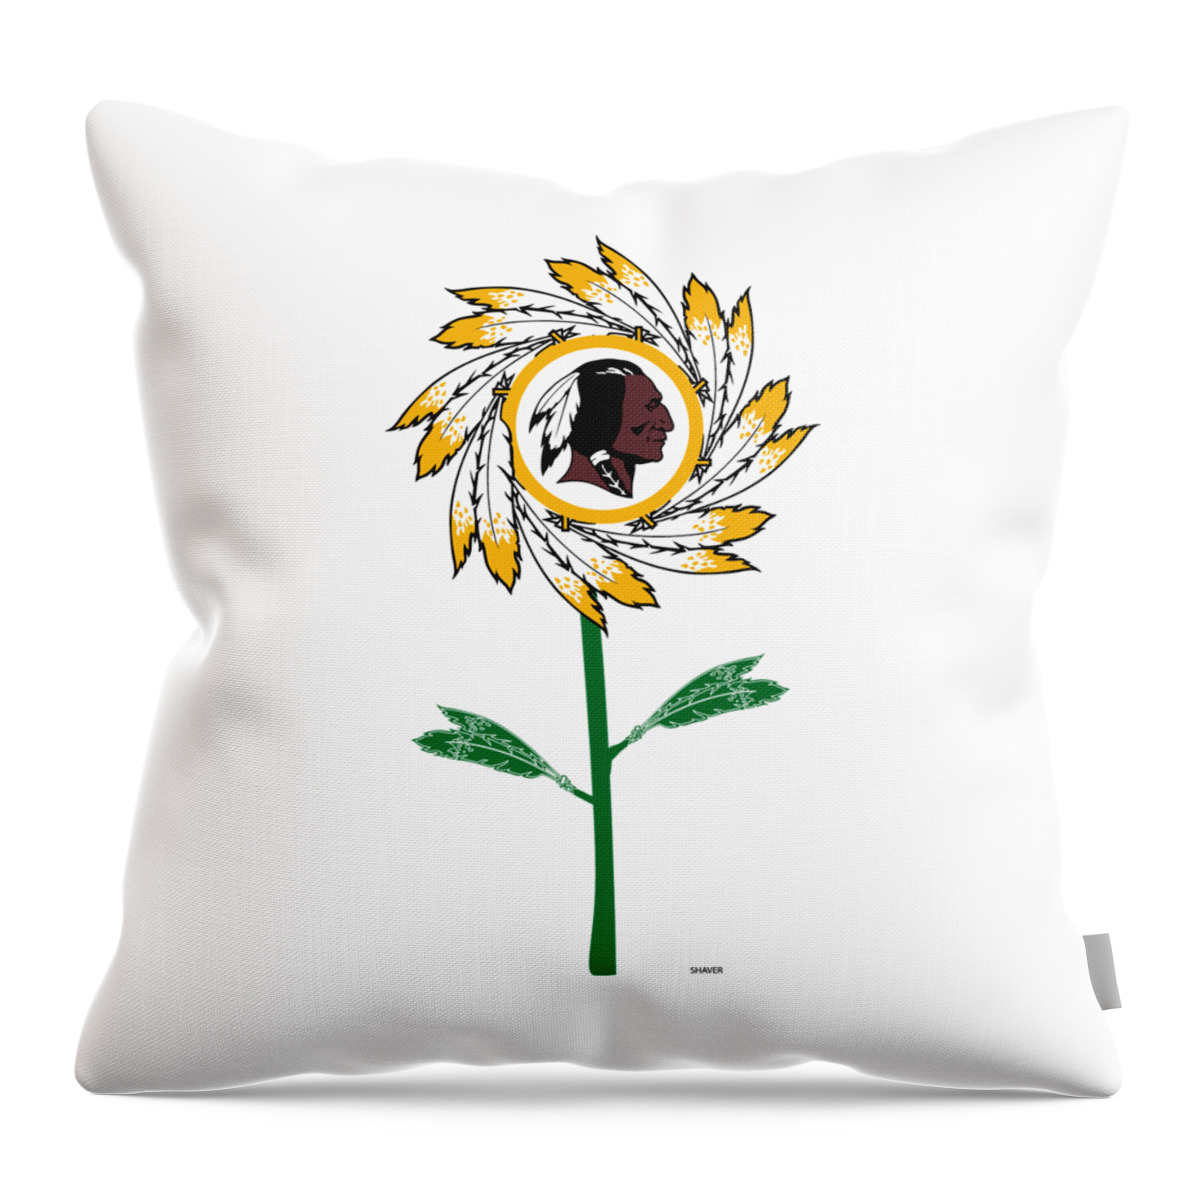 Nfl Throw Pillow featuring the digital art Washington Redskins Commanders - NFL Football Team Logo Flower Art by Steven Shaver